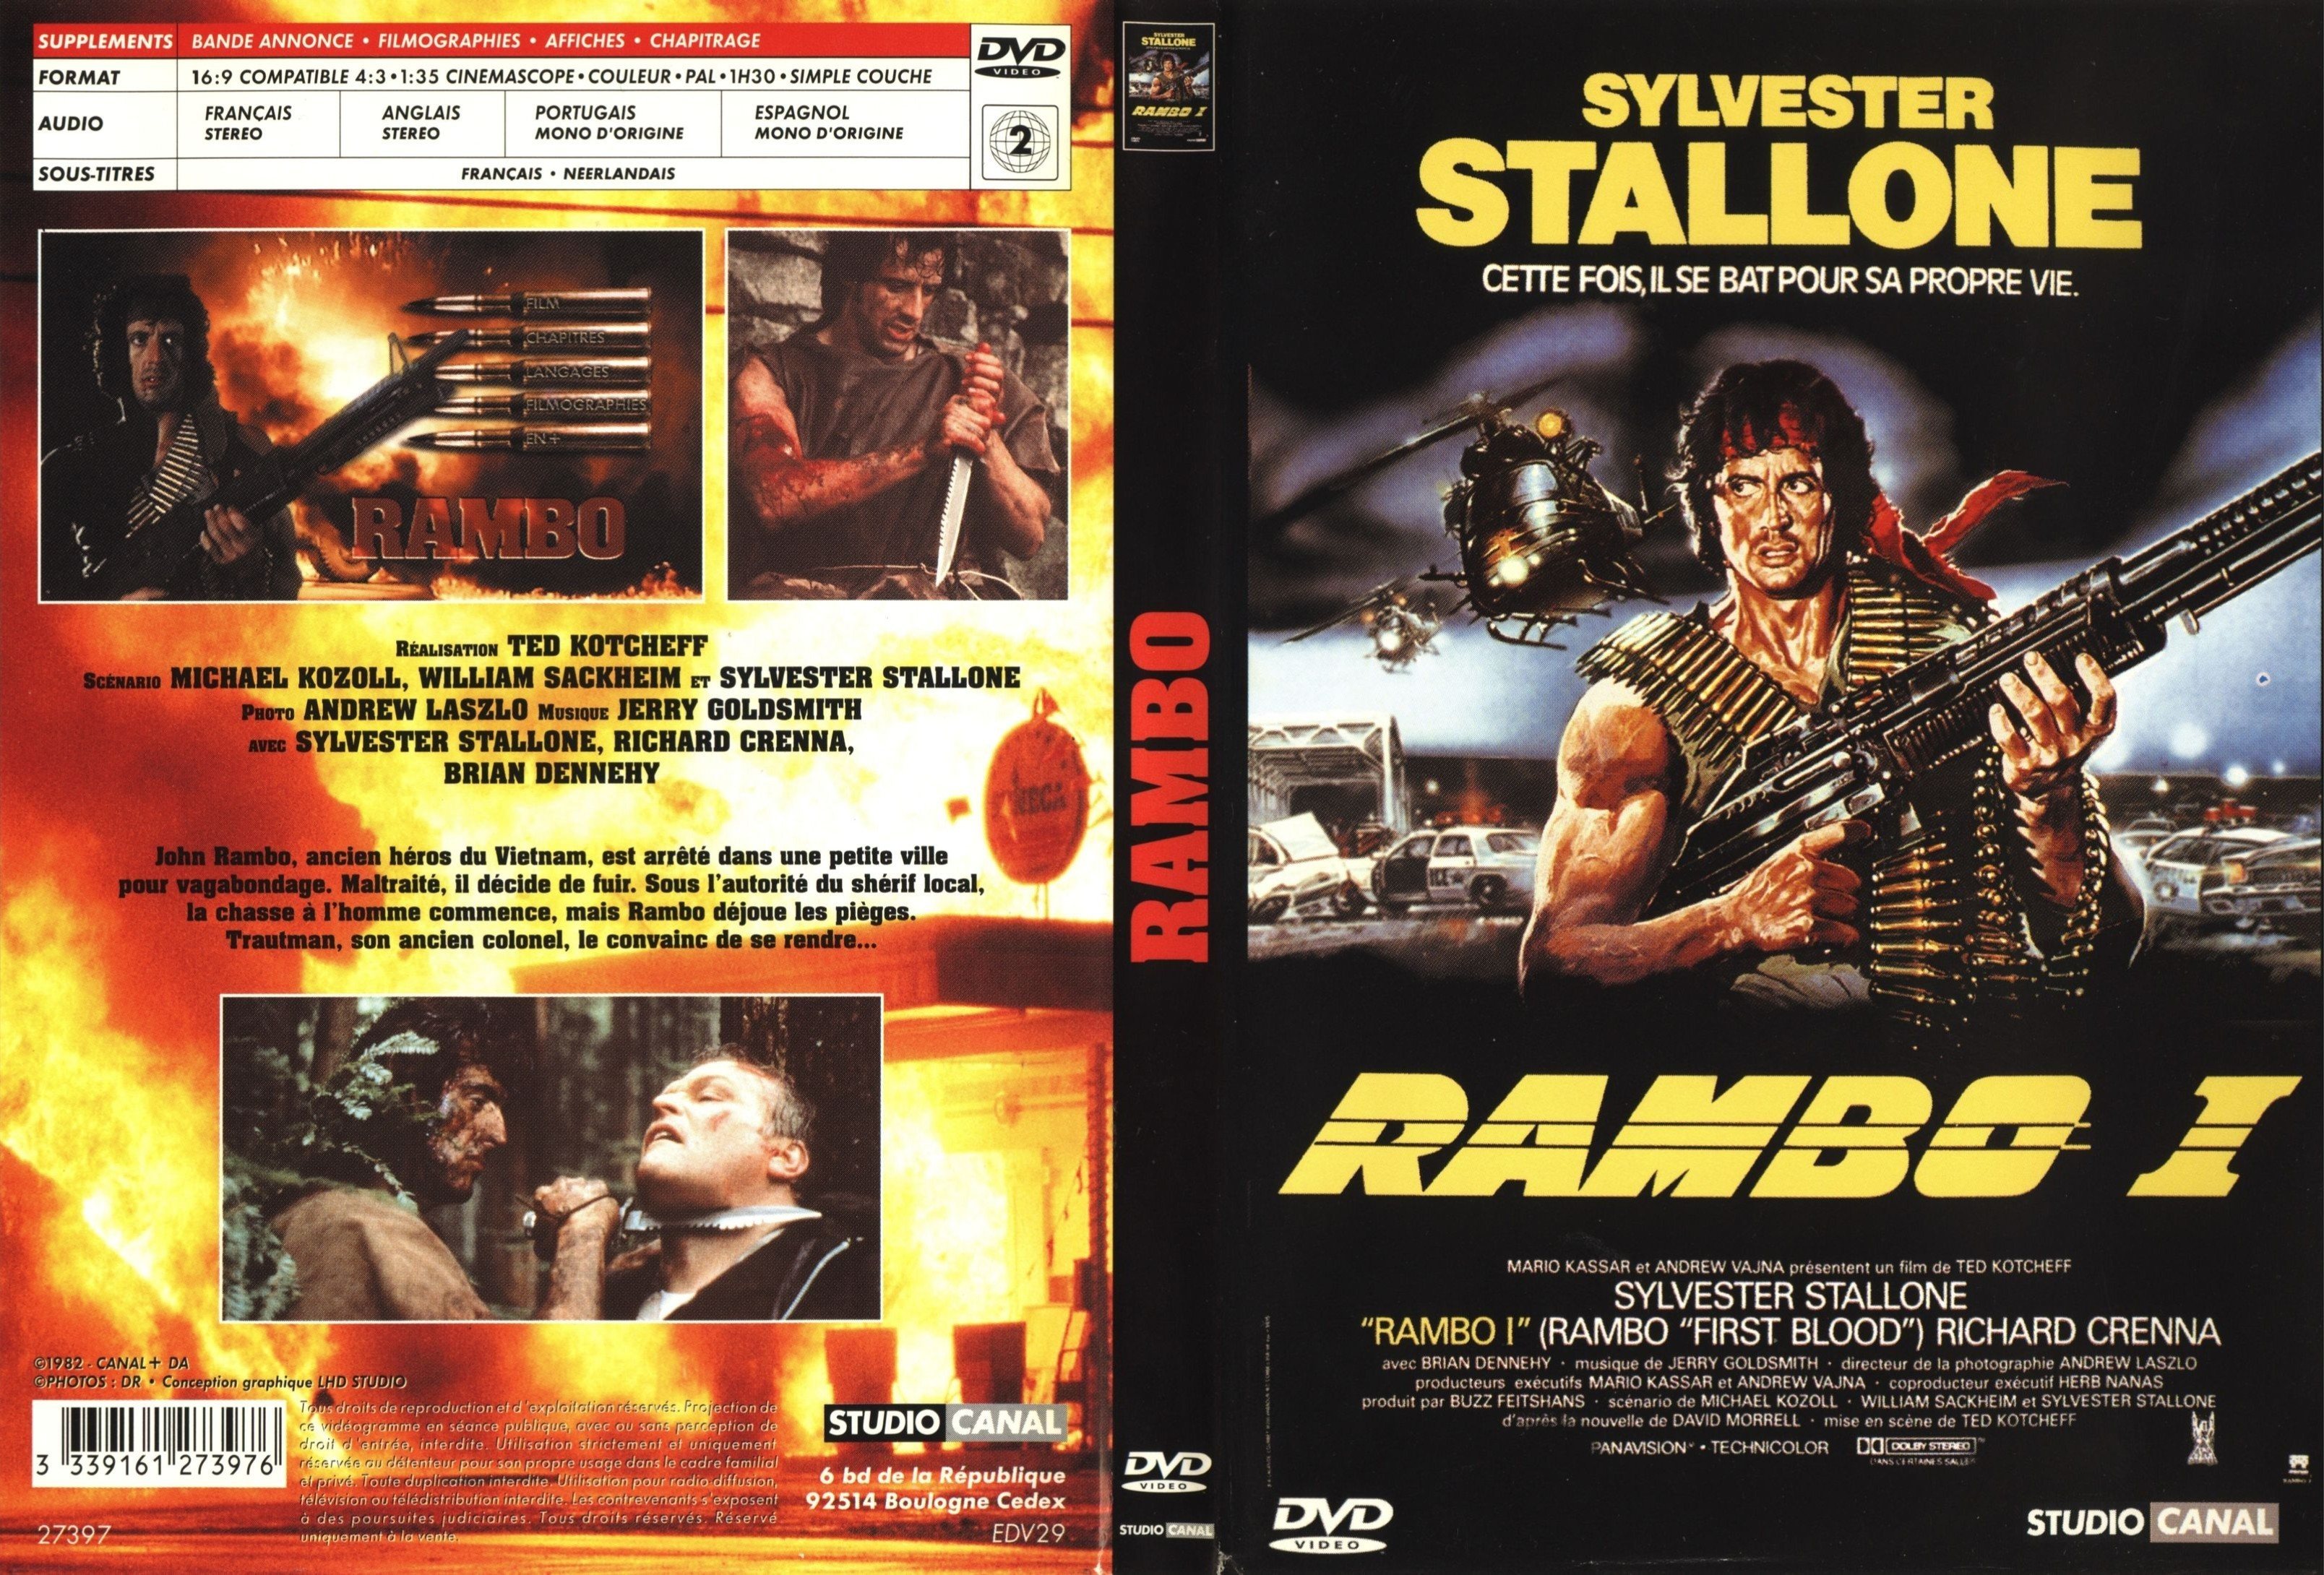 Jaquette DVD Rambo